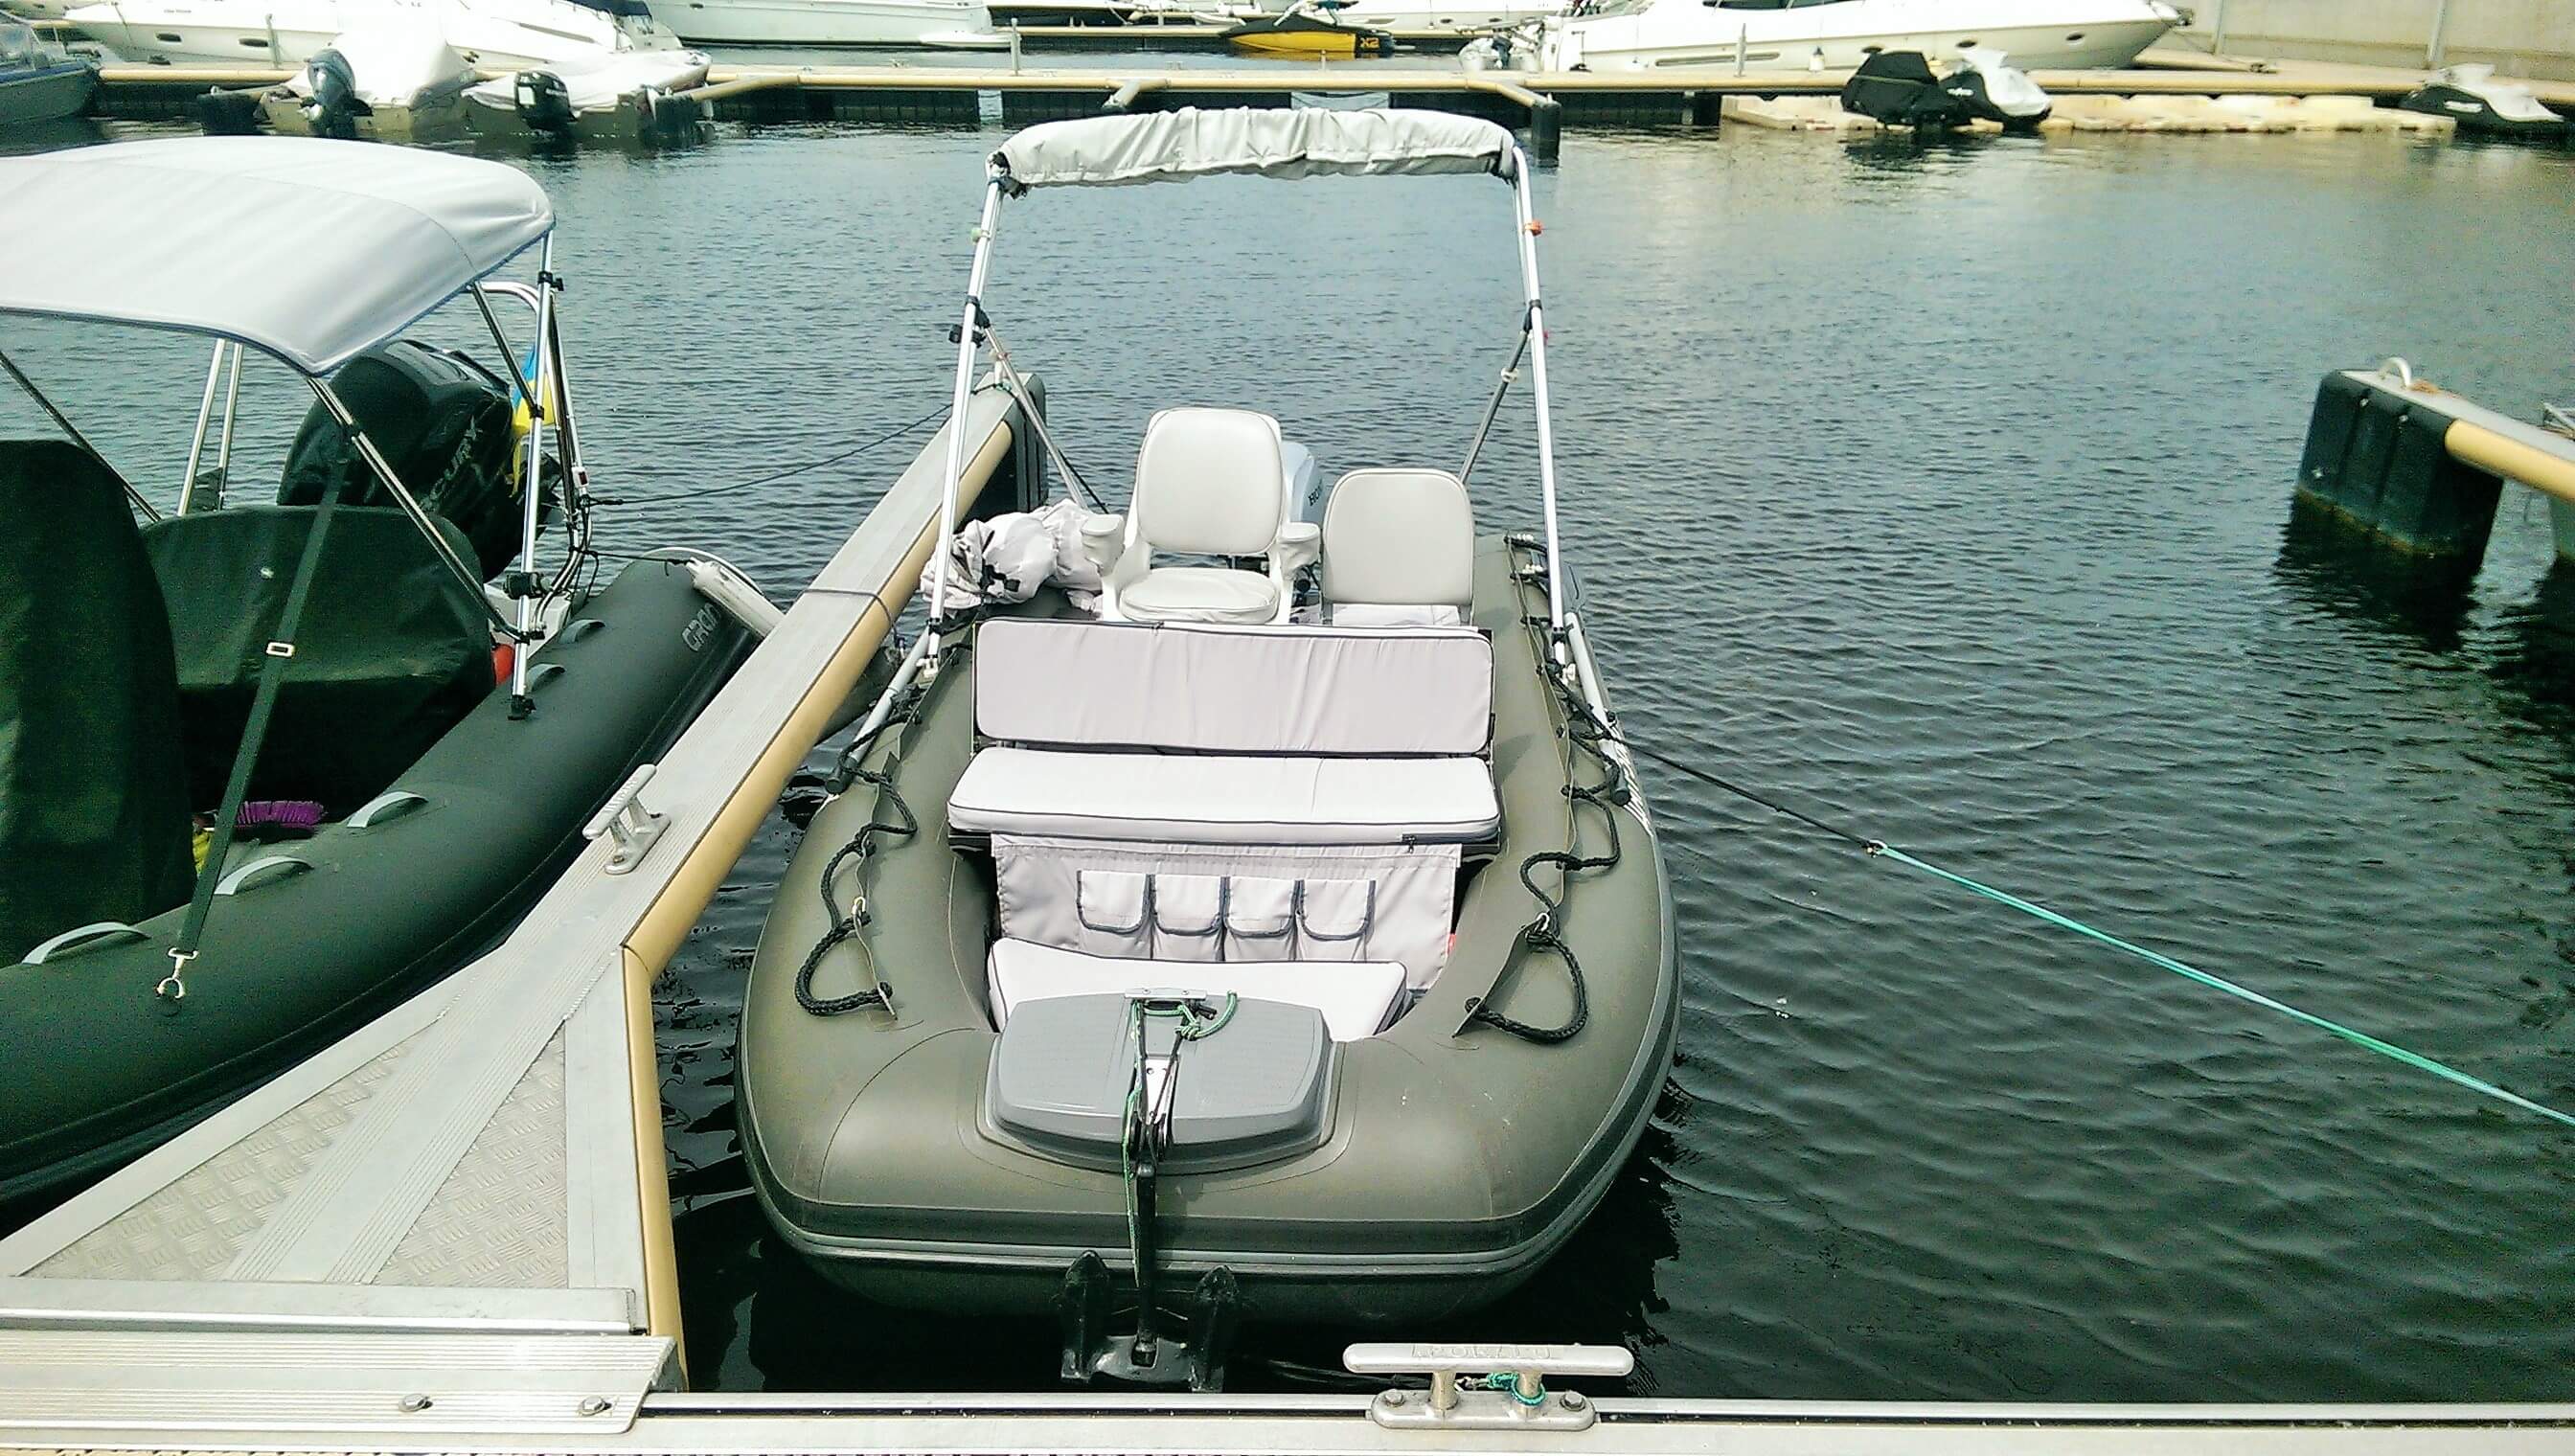 Надувная лодка с жестким дном GRAND Silver Line S420N, Надувная лодка GRAND Silver Line S420N, GRAND Silver Line S420NF, GRAND Silver Line S420N, GRAND S420NF, GRAND S420N, GRAND S420, Надувная лодка GRAND, Надувная лодка ГРАНД, Надувная лодка с жестким дном, RIB, Rigid Inflatable Boats